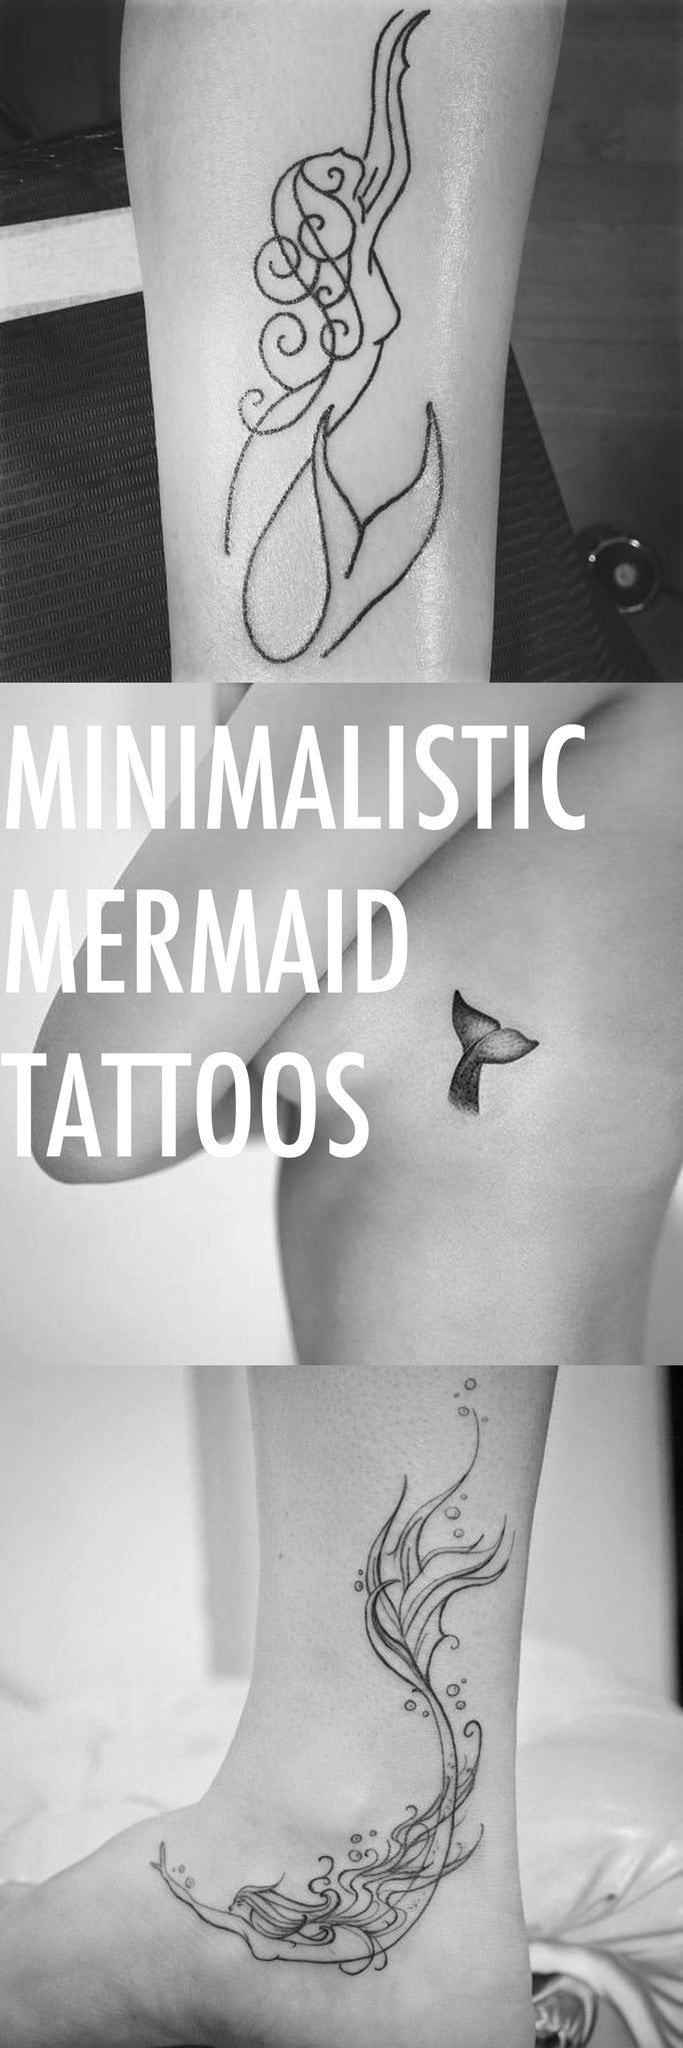 Minimalistic Mermaid Tattoo Ideas at MyBodiArt.com - Beautiful Black and White Rib Side Boob Whale Tatt Ankle Arm